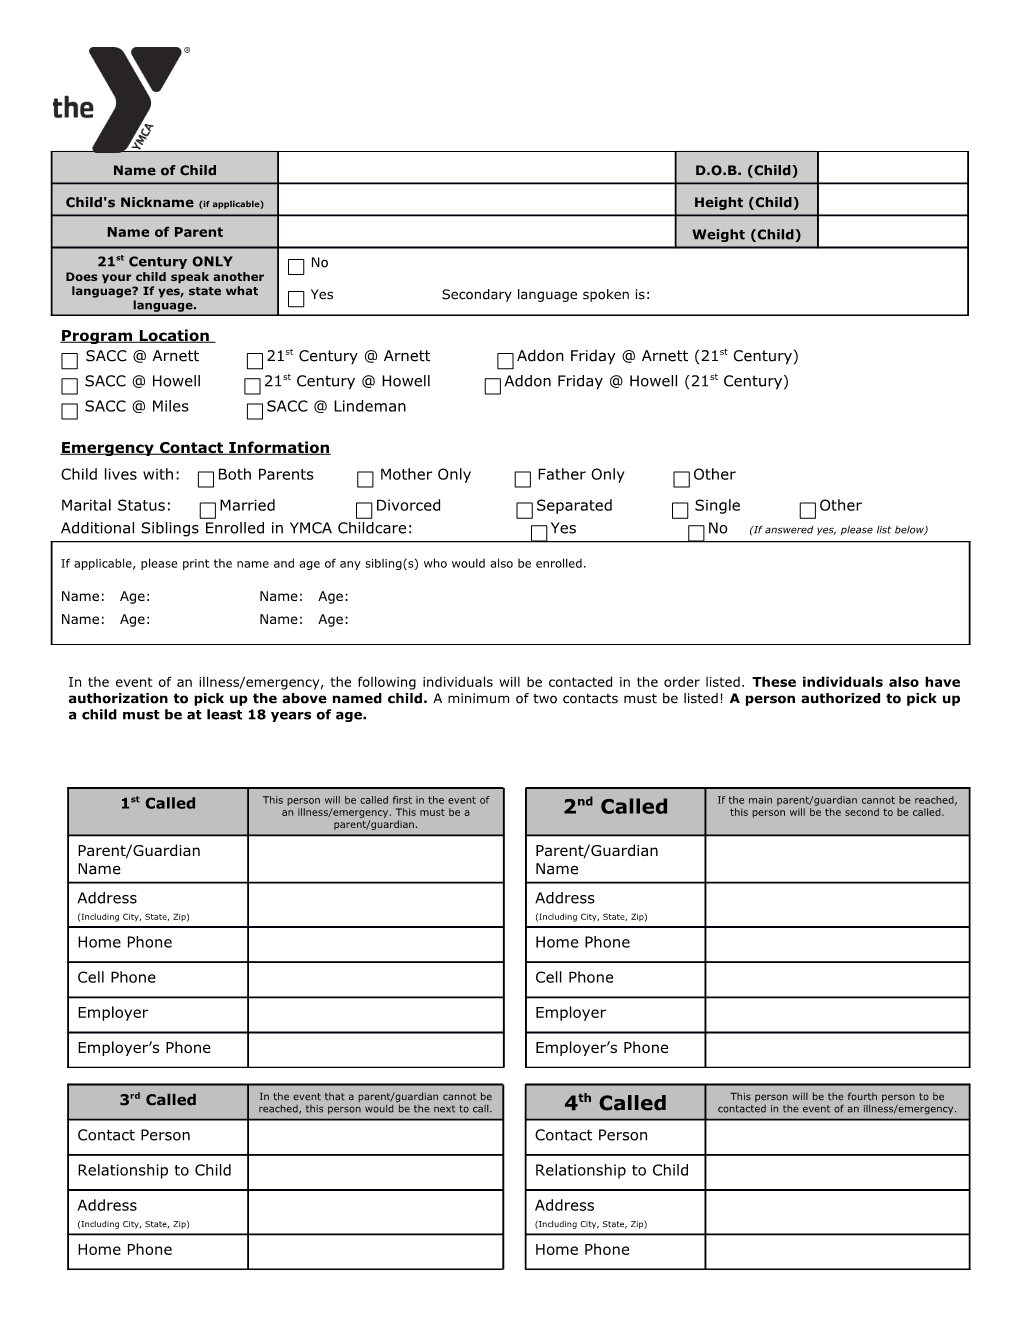 Blue Ash Ymca Camp Creekwood Registration Form